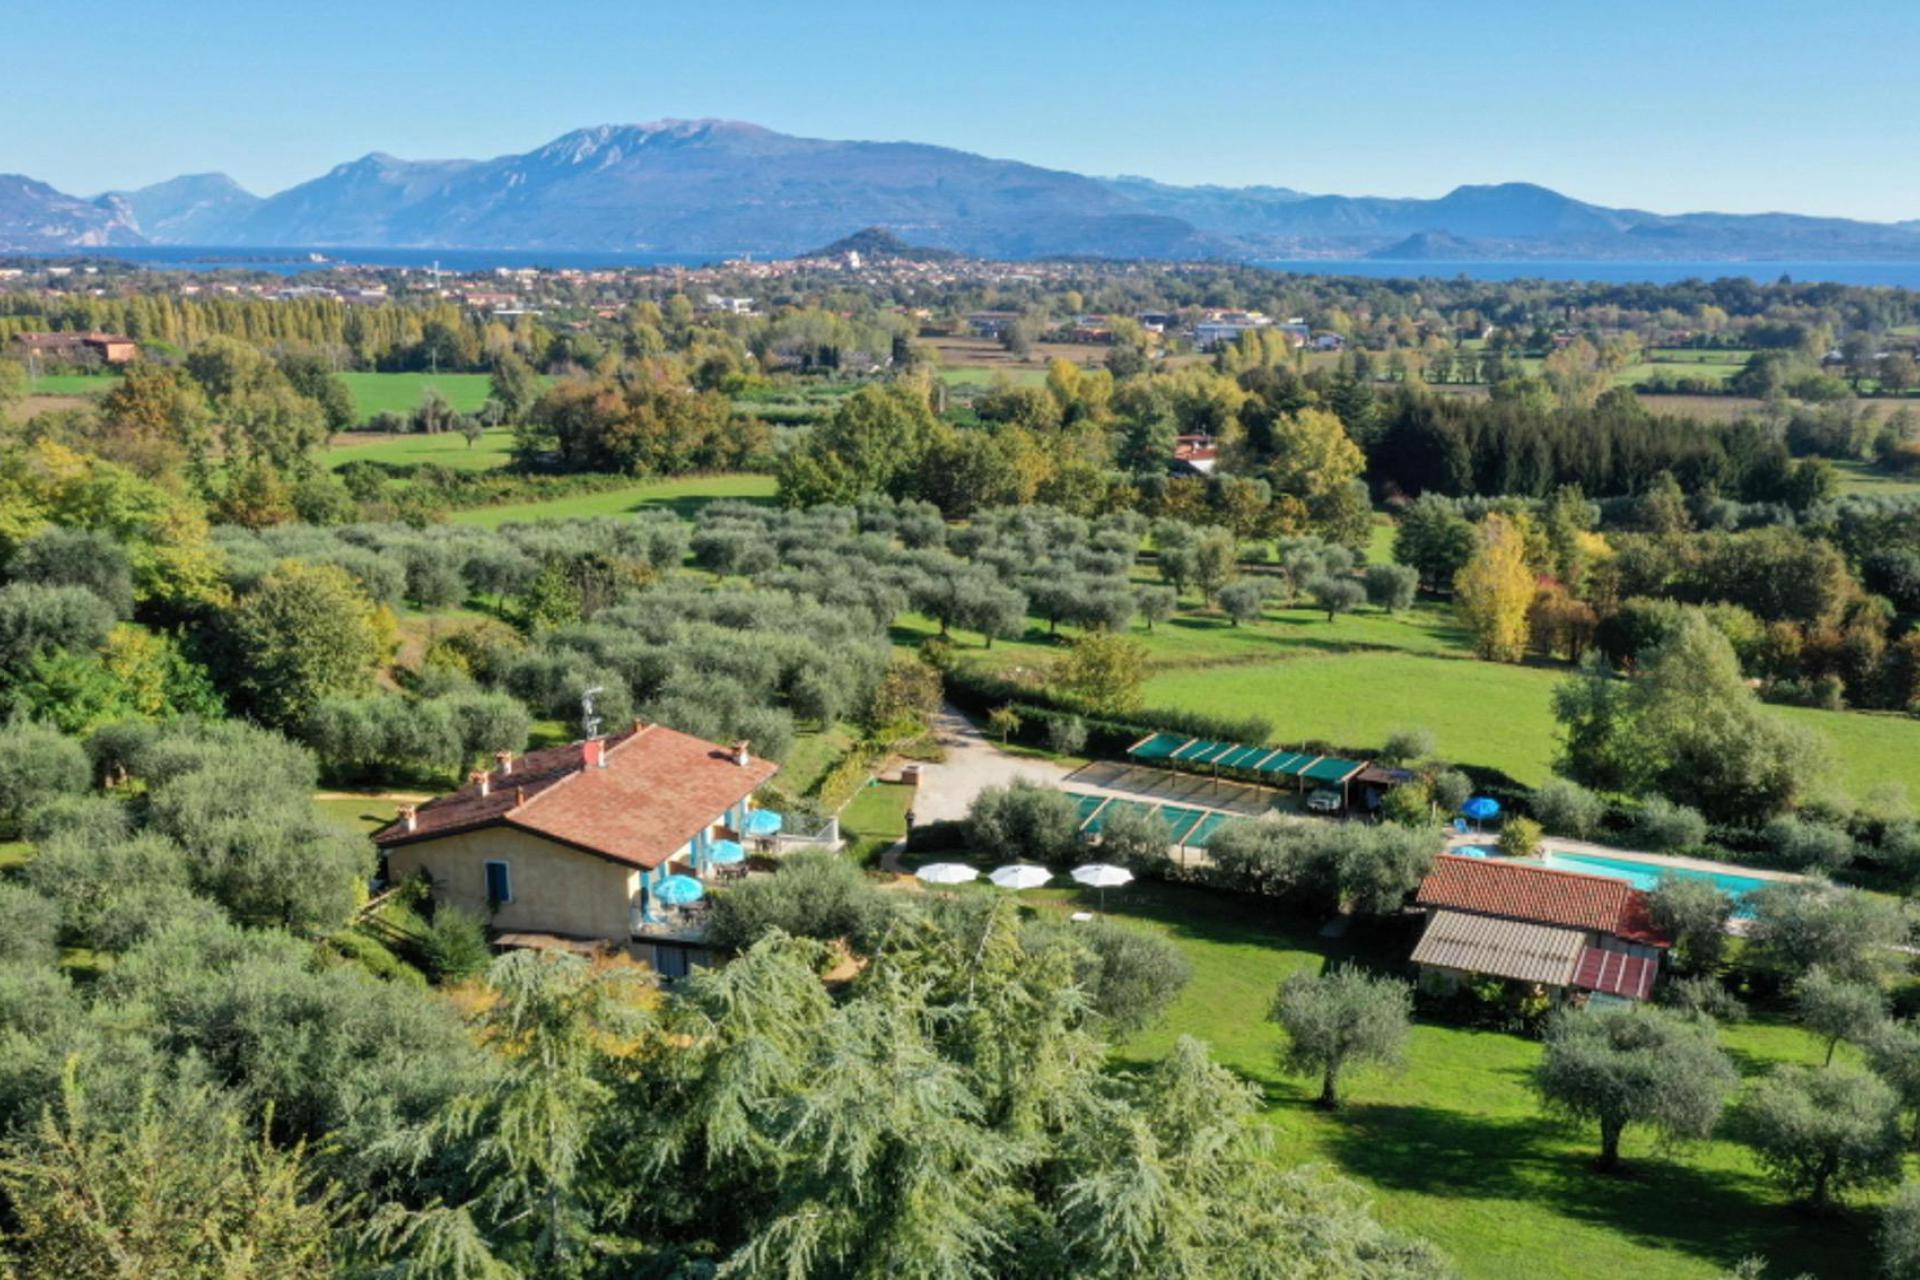 Agriturismo Lake Como and Lake Garda Small cozy agriturismo in an olive grove near Lake Garda